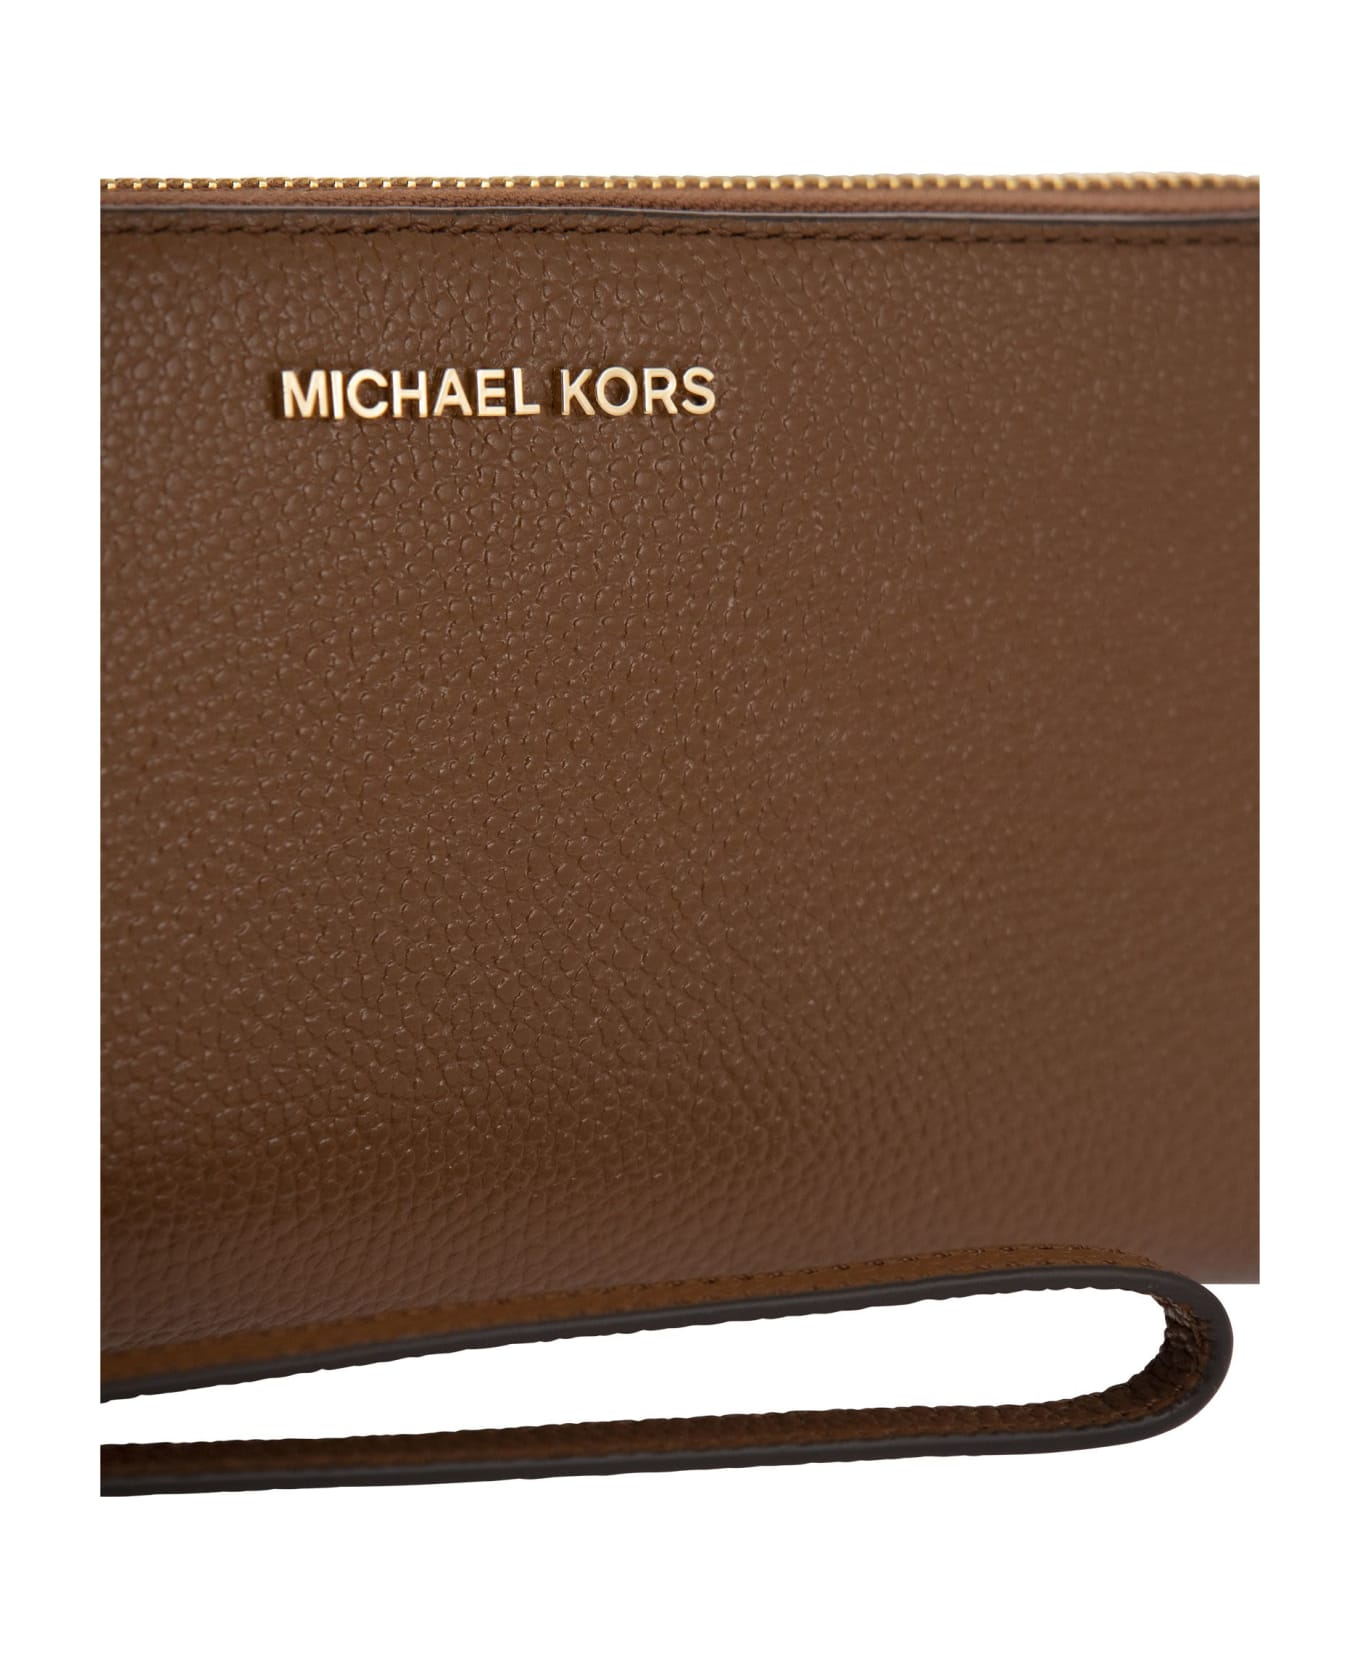 Michael Kors Jet Set - Grained Leather Wallet - Brown 財布